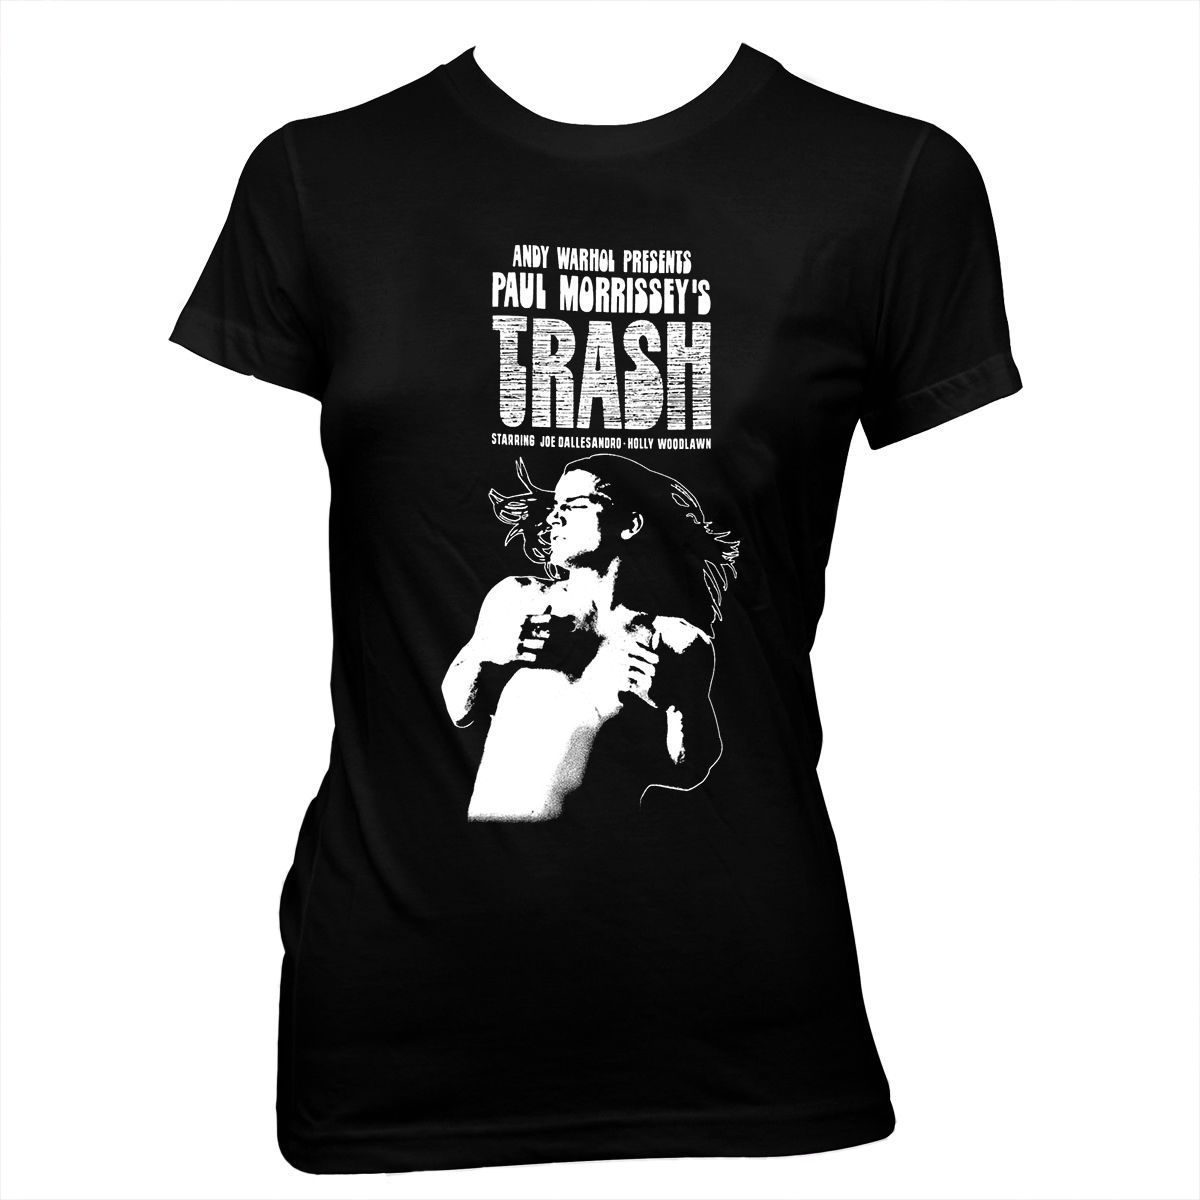 Paul Morrissey's Trash - Andy Warhol - Women's Hand screened 100% cotton t-shirt